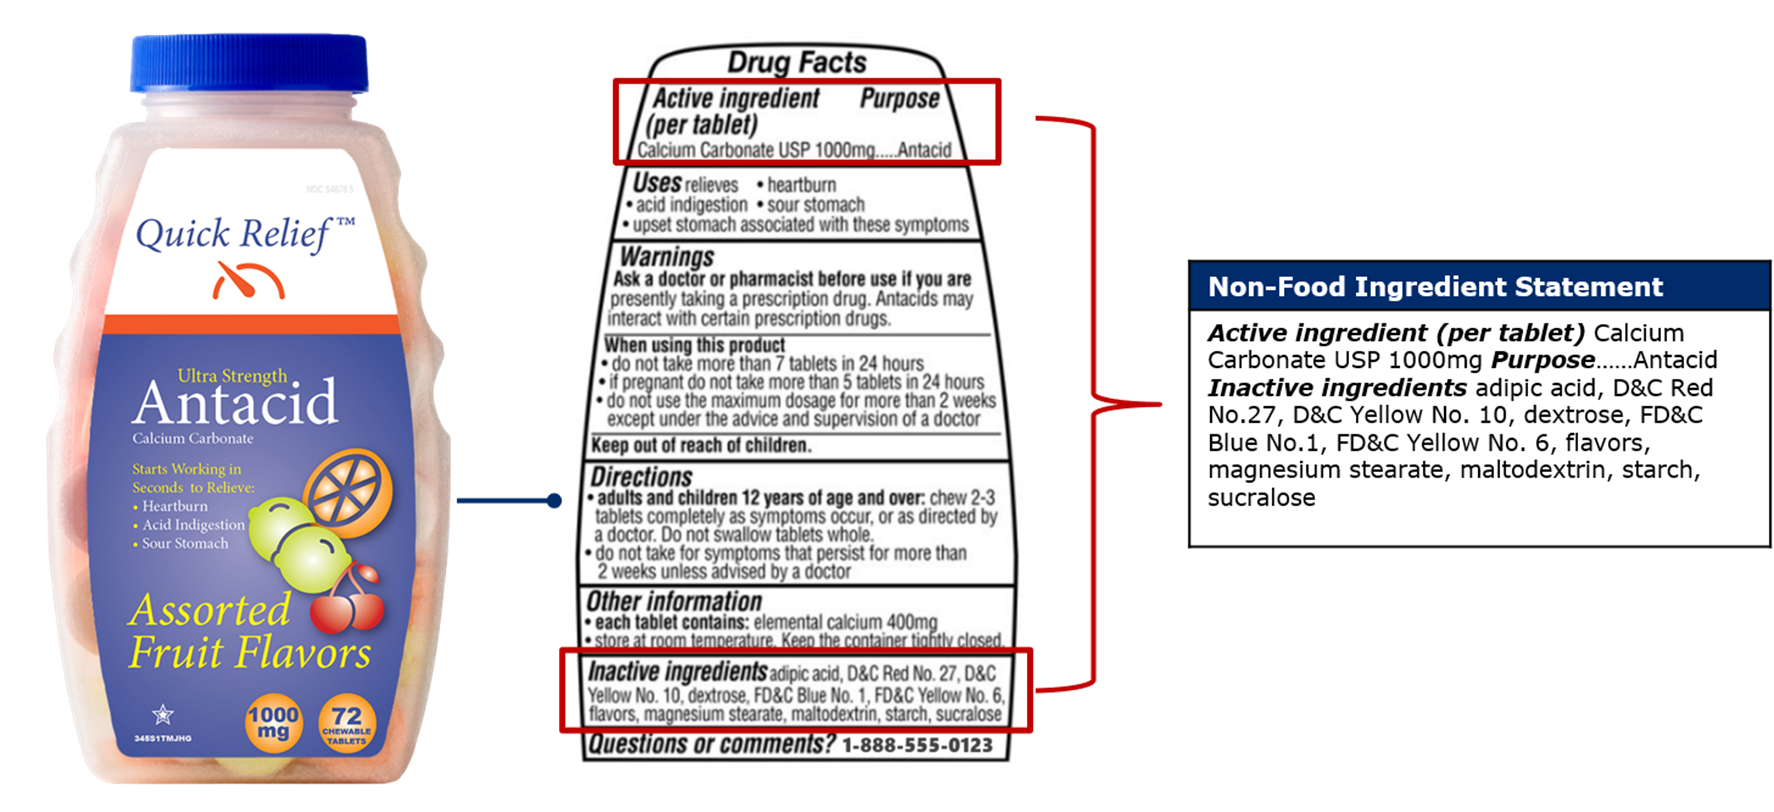 10.7 Non-Food Ingredient Statement Example – Active and Inactive Ingredients - Image 0